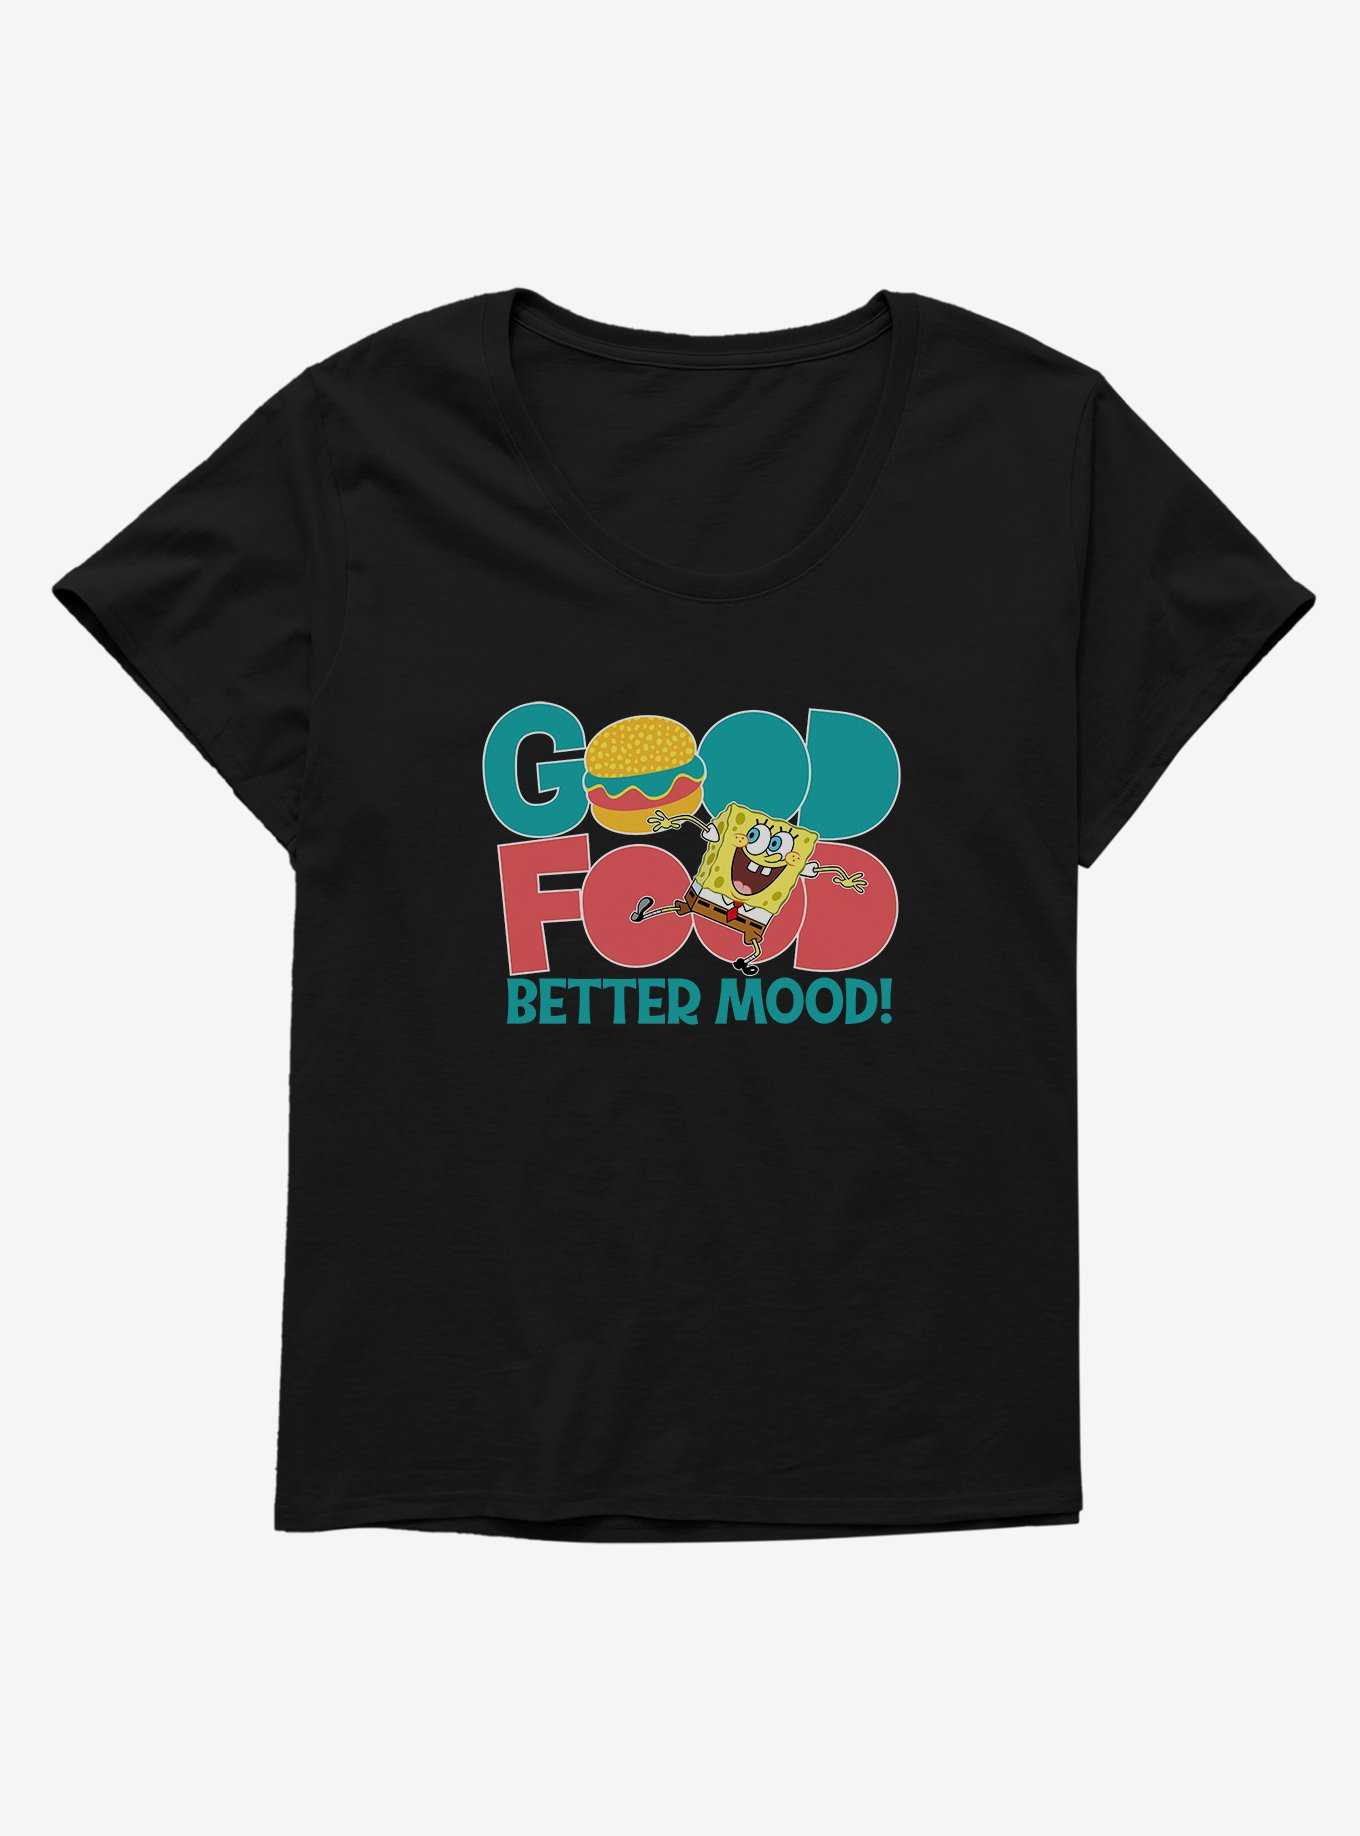 SpongeBob SquarePants Good Food Better Mood! Girls T-Shirt Plus Size, , hi-res